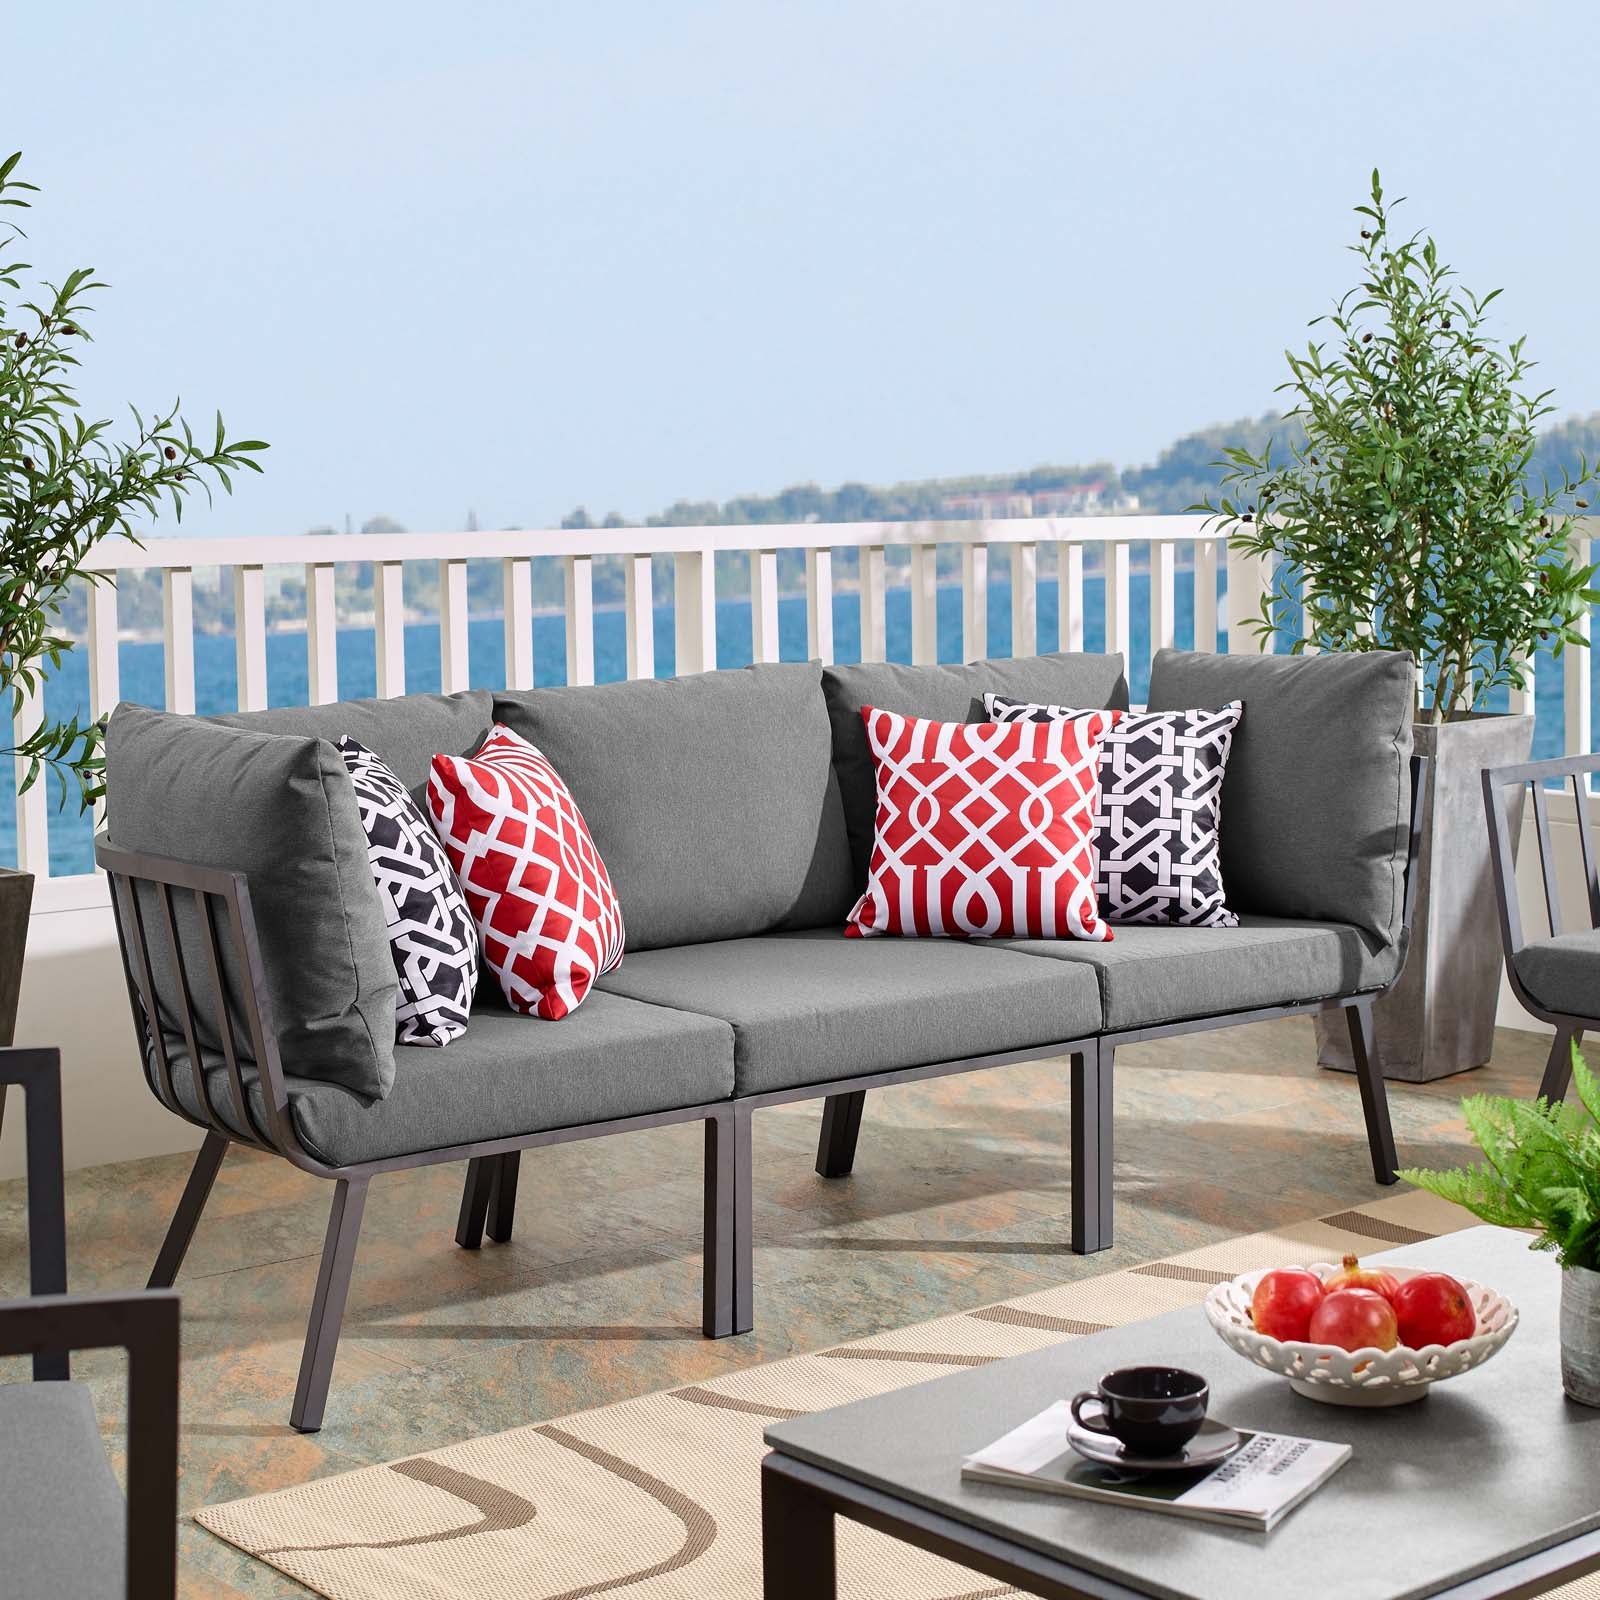 Riverside 3 Piece Outdoor Patio Aluminum Sectional Sofa Set - East Shore Modern Home Furnishings